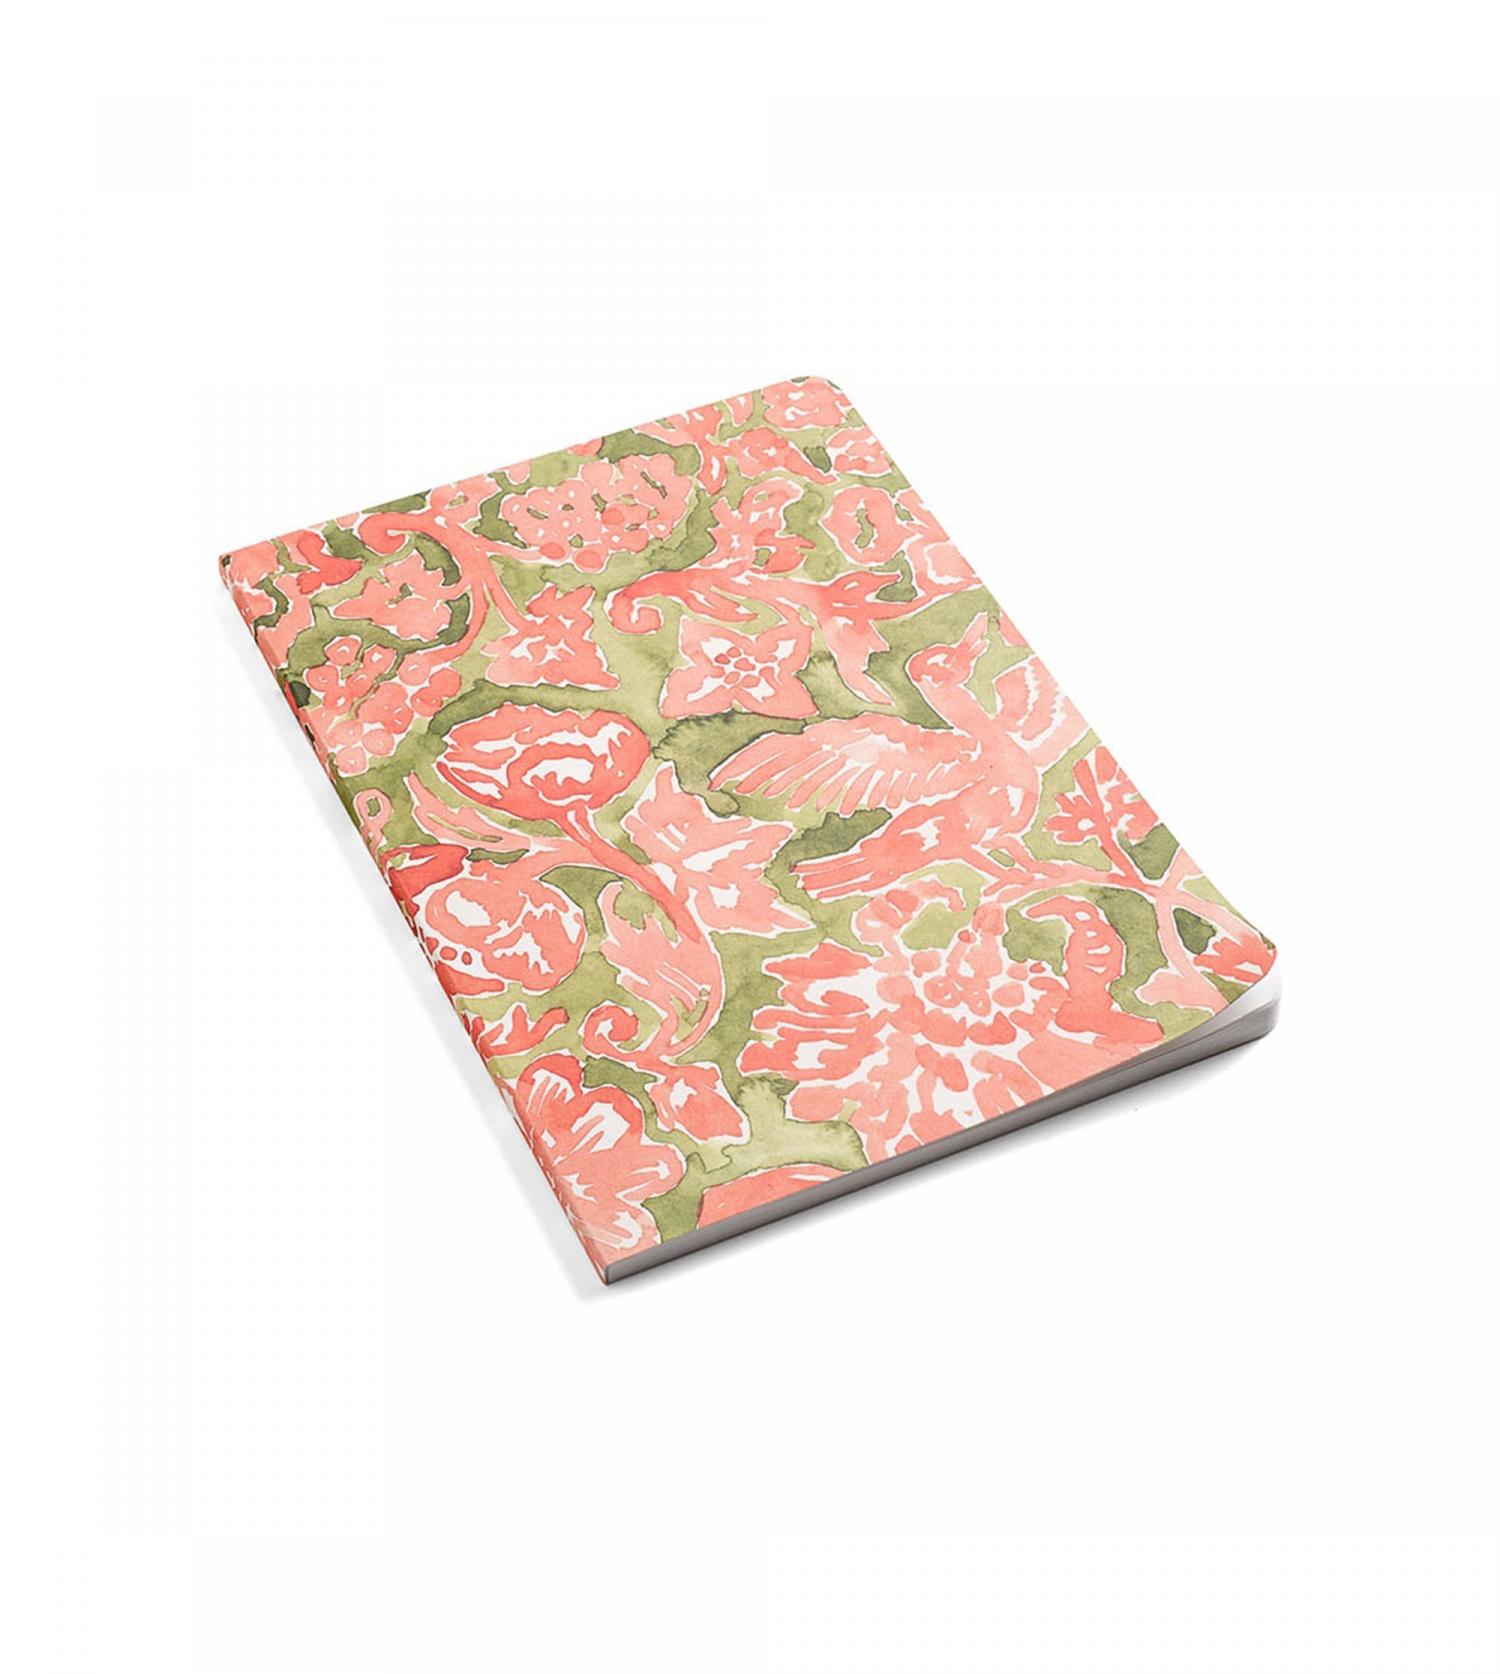 Carnets design miami notebook